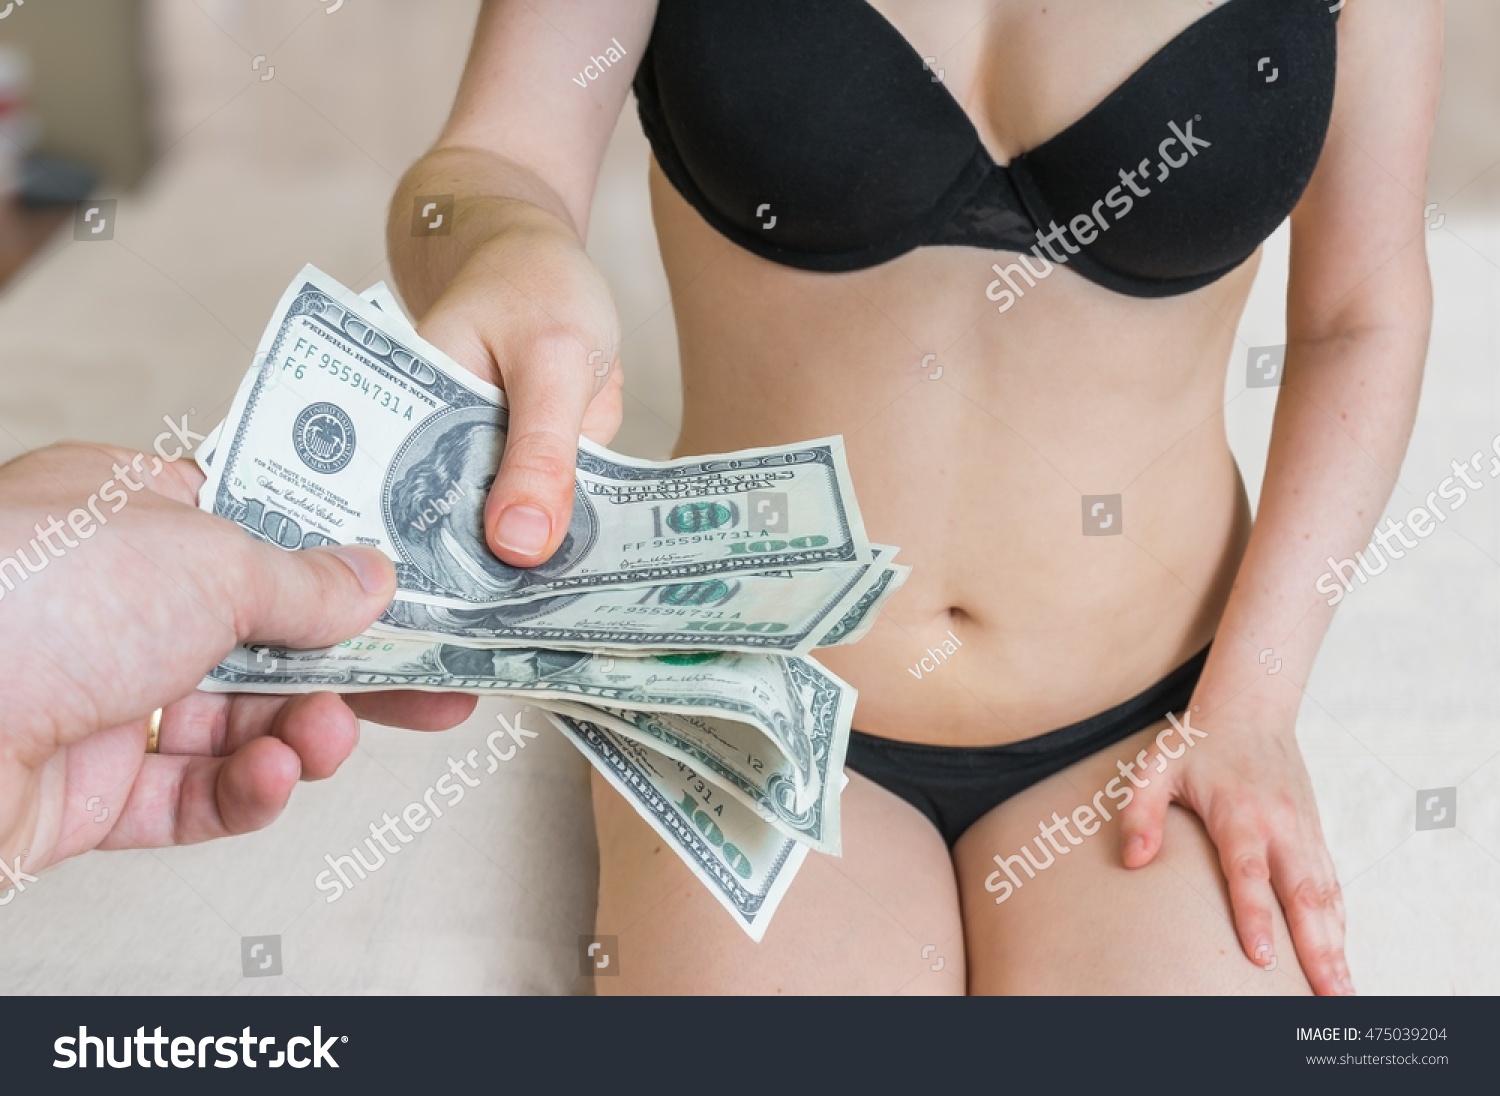 Eskort Prostitution